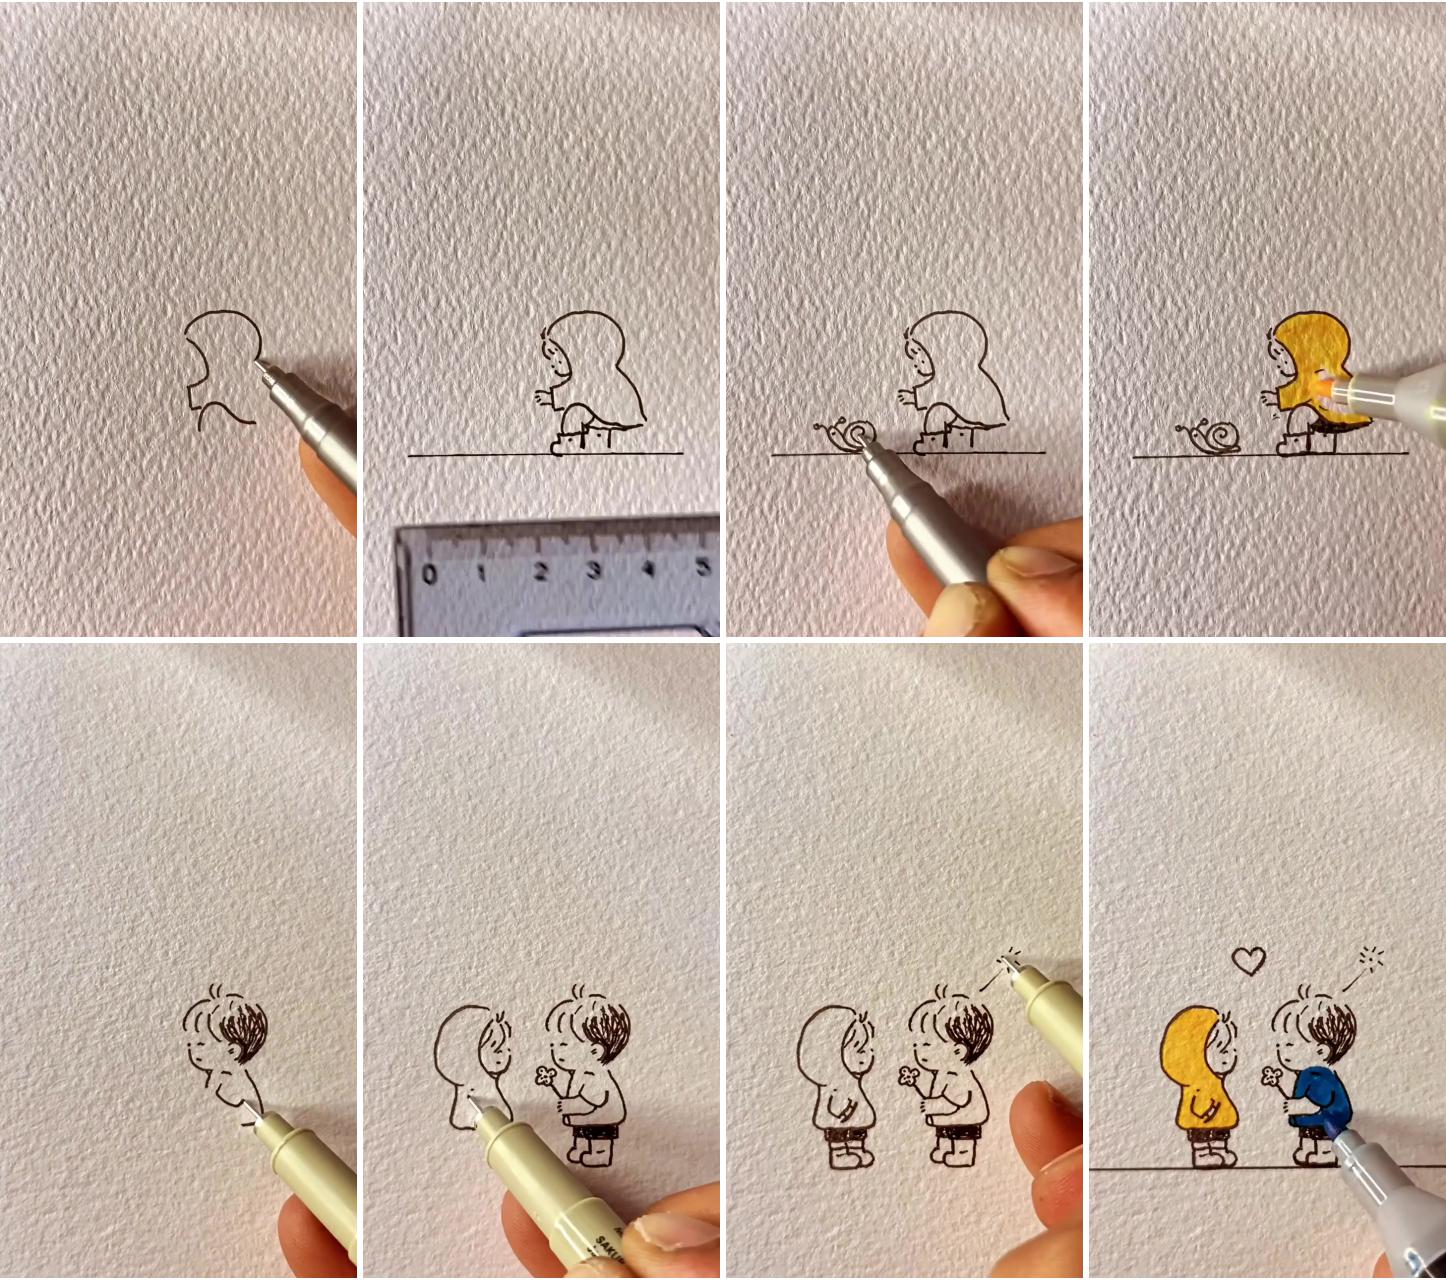 Cute doodles drawings | book art drawings